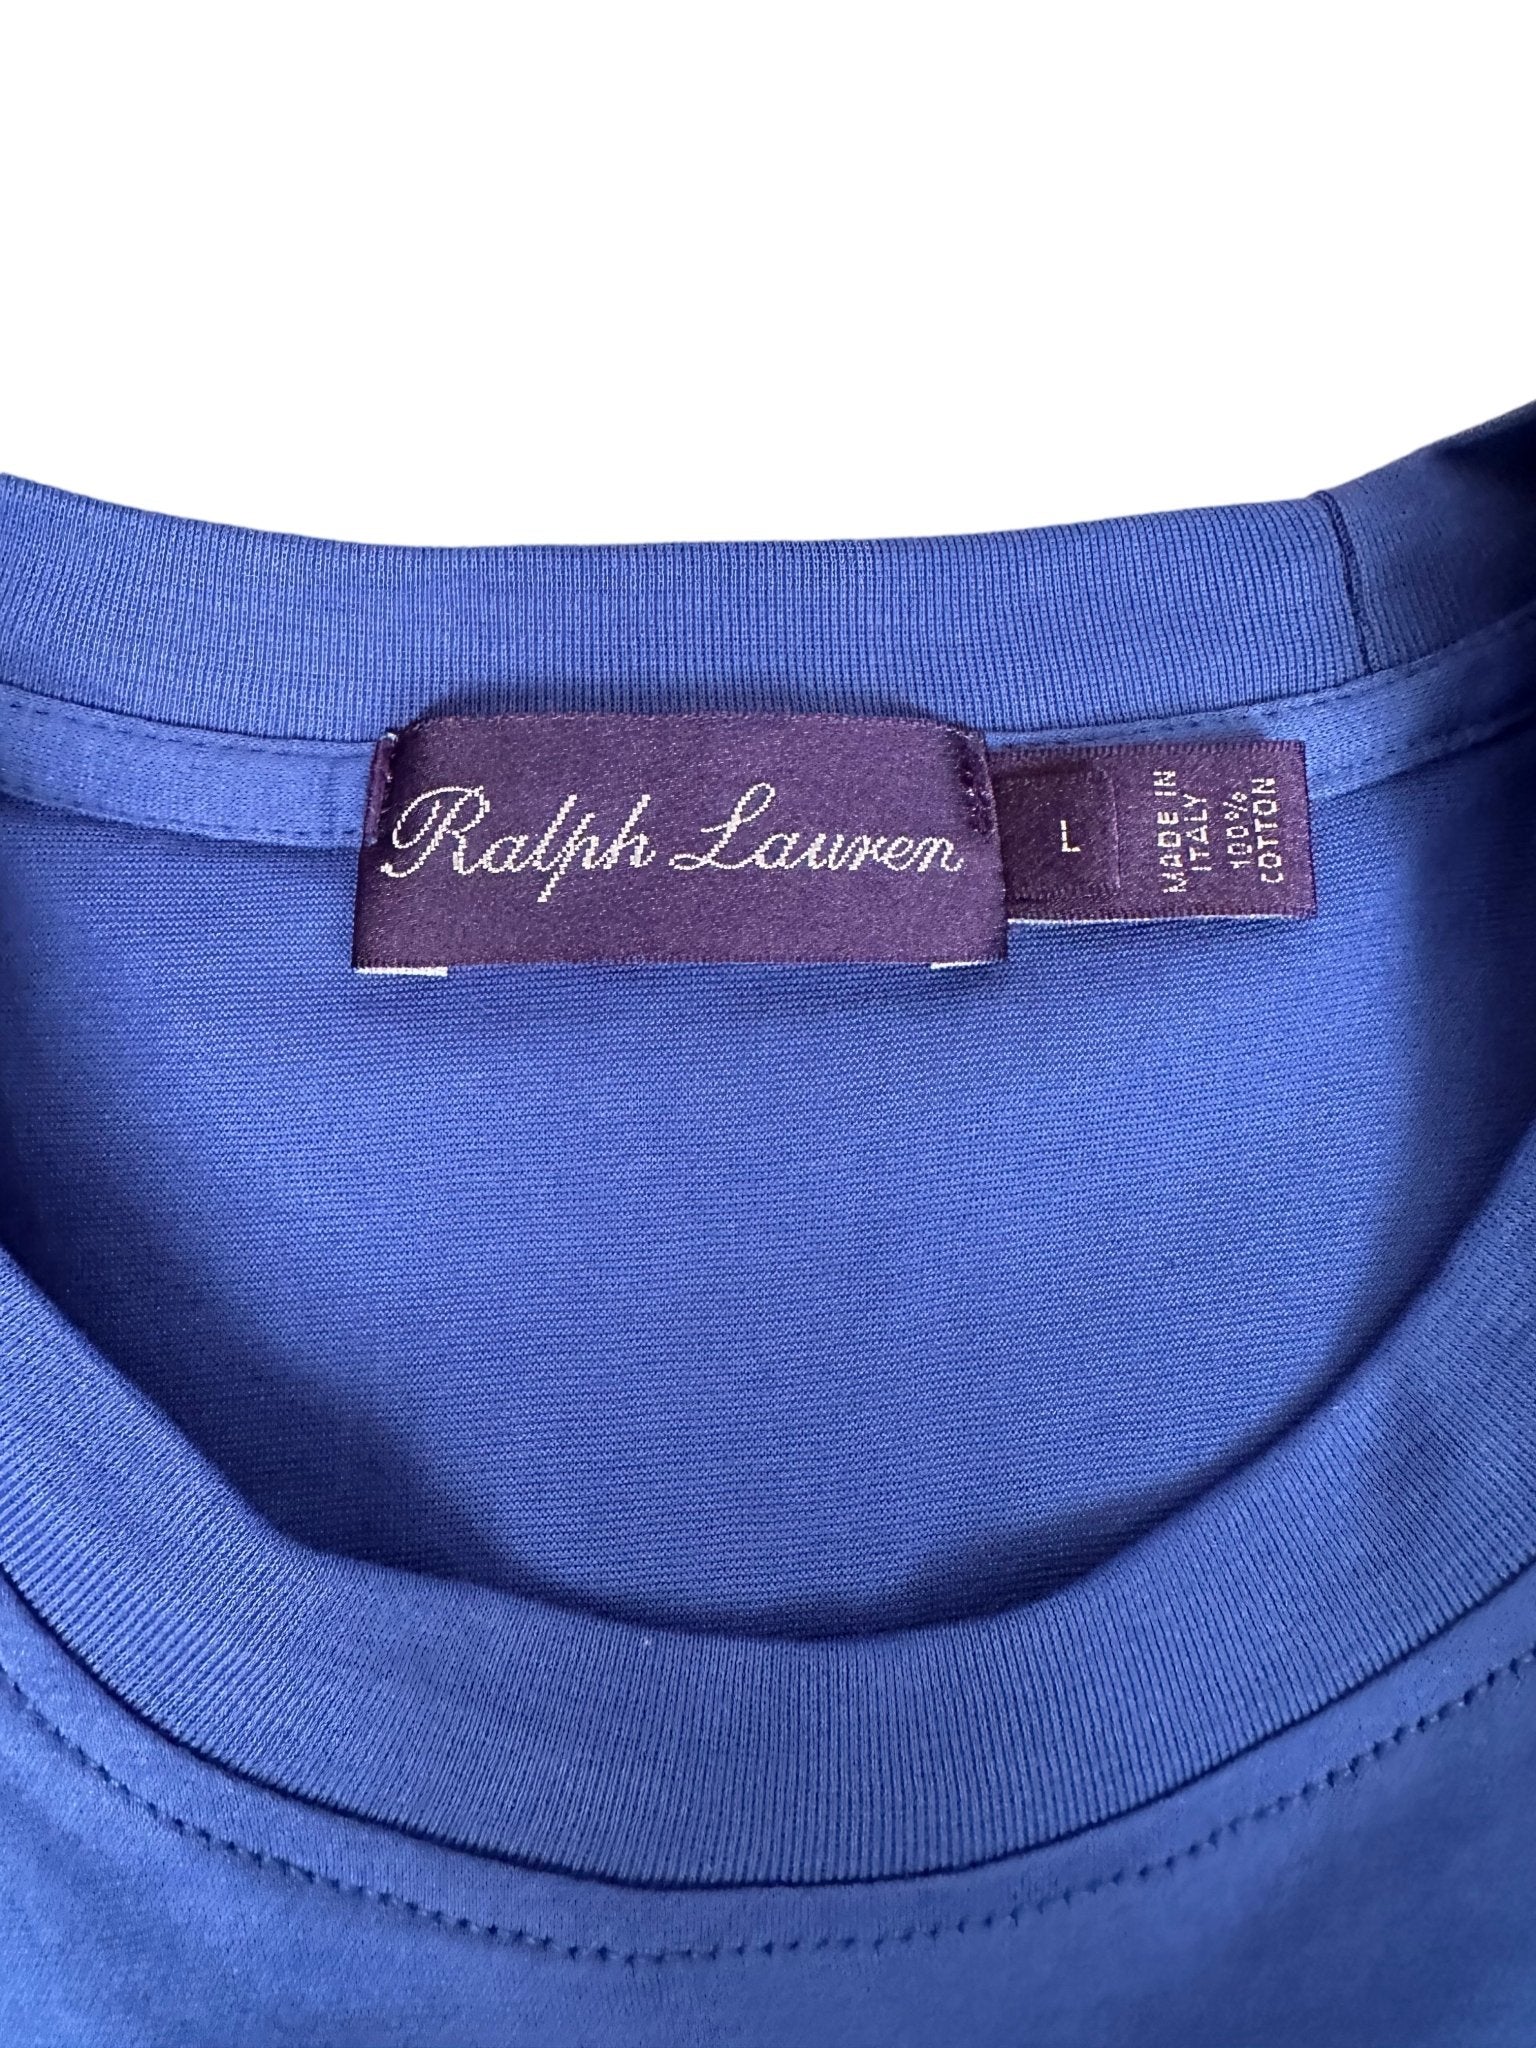 Ralph Lauren Purple Label T-Shirt blau - 24/7 Clothing